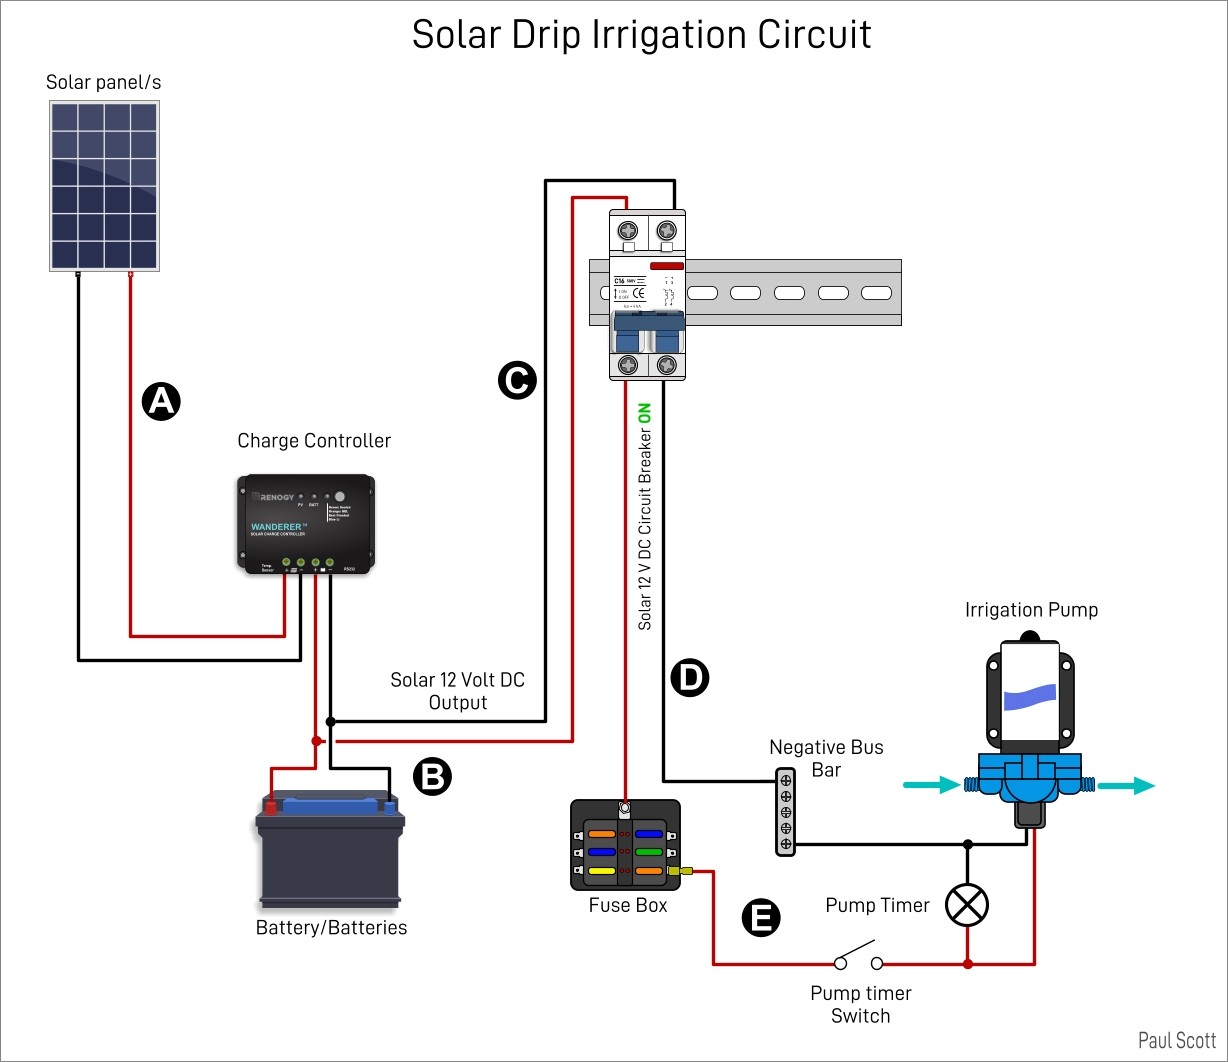 Solar circuit